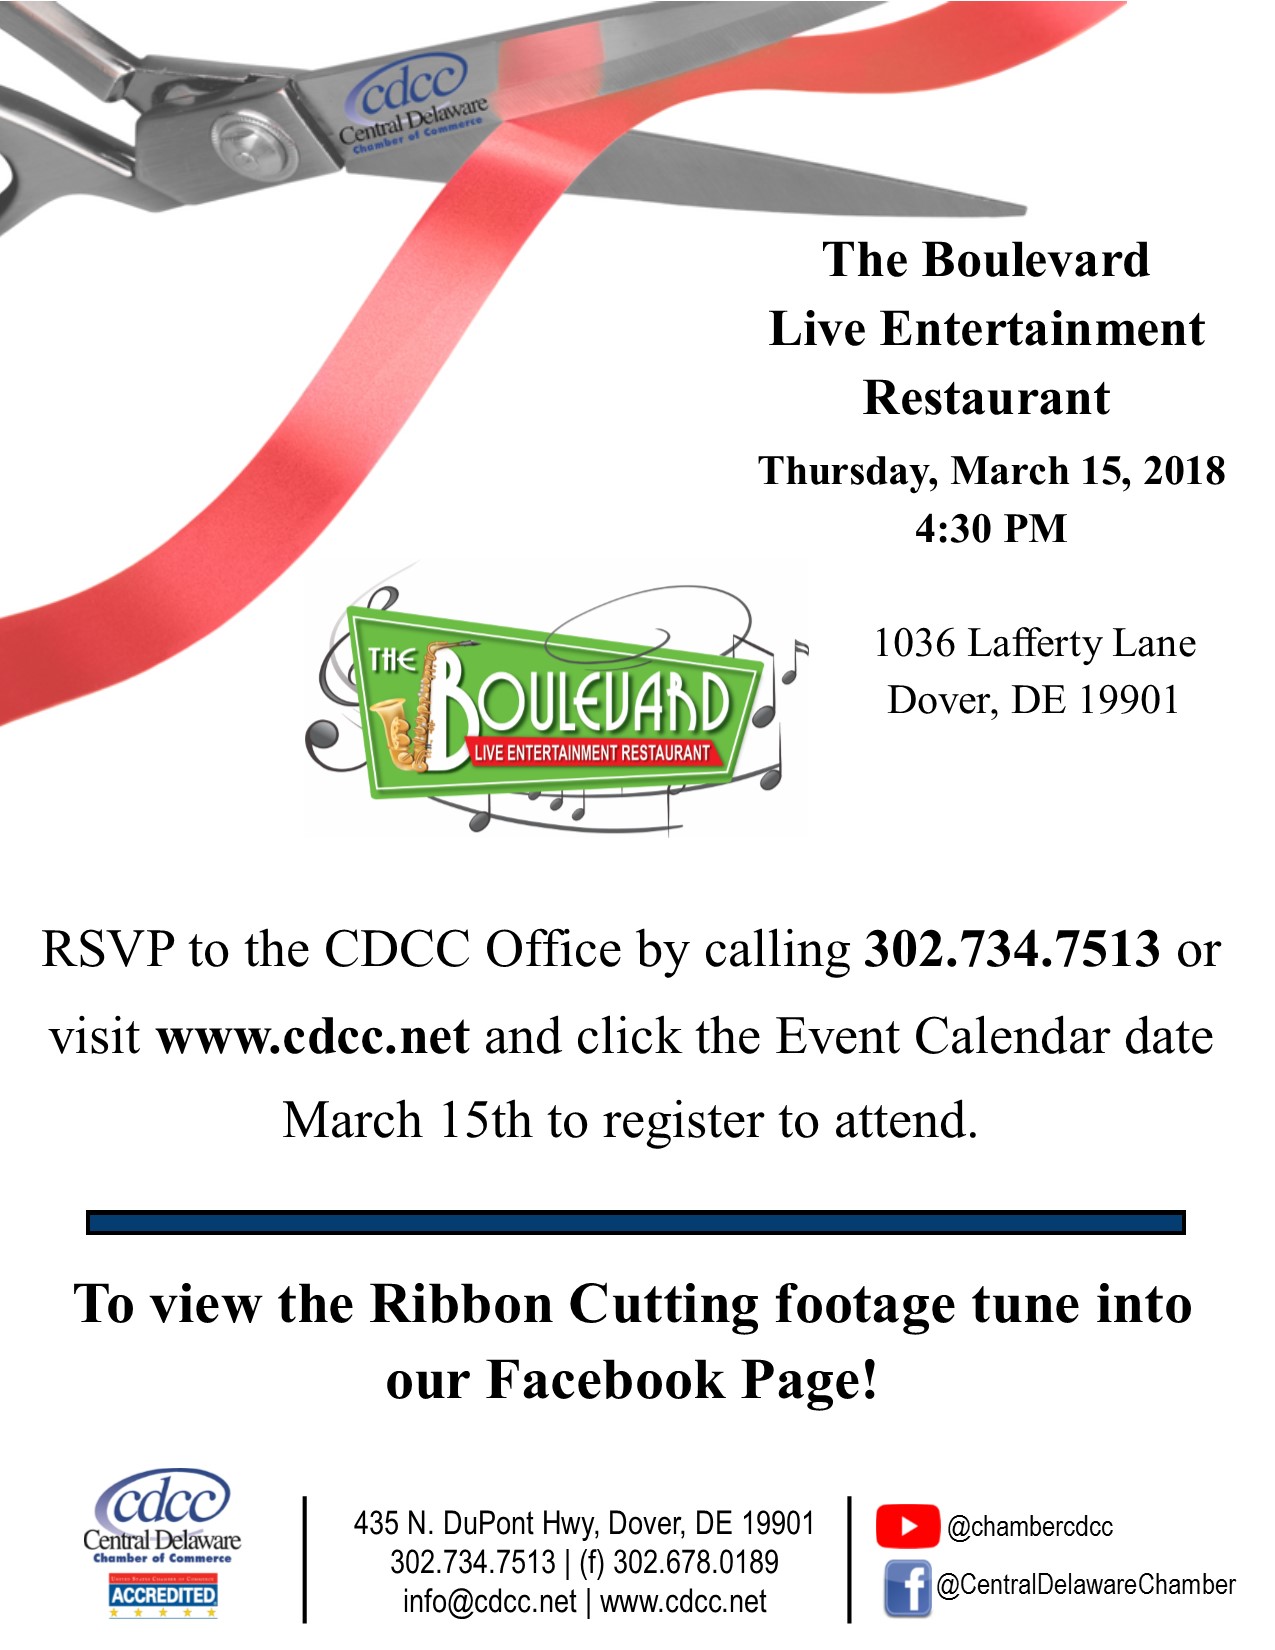 Ribbon Cutting - The Boulevard Live Entertainment Restaurant